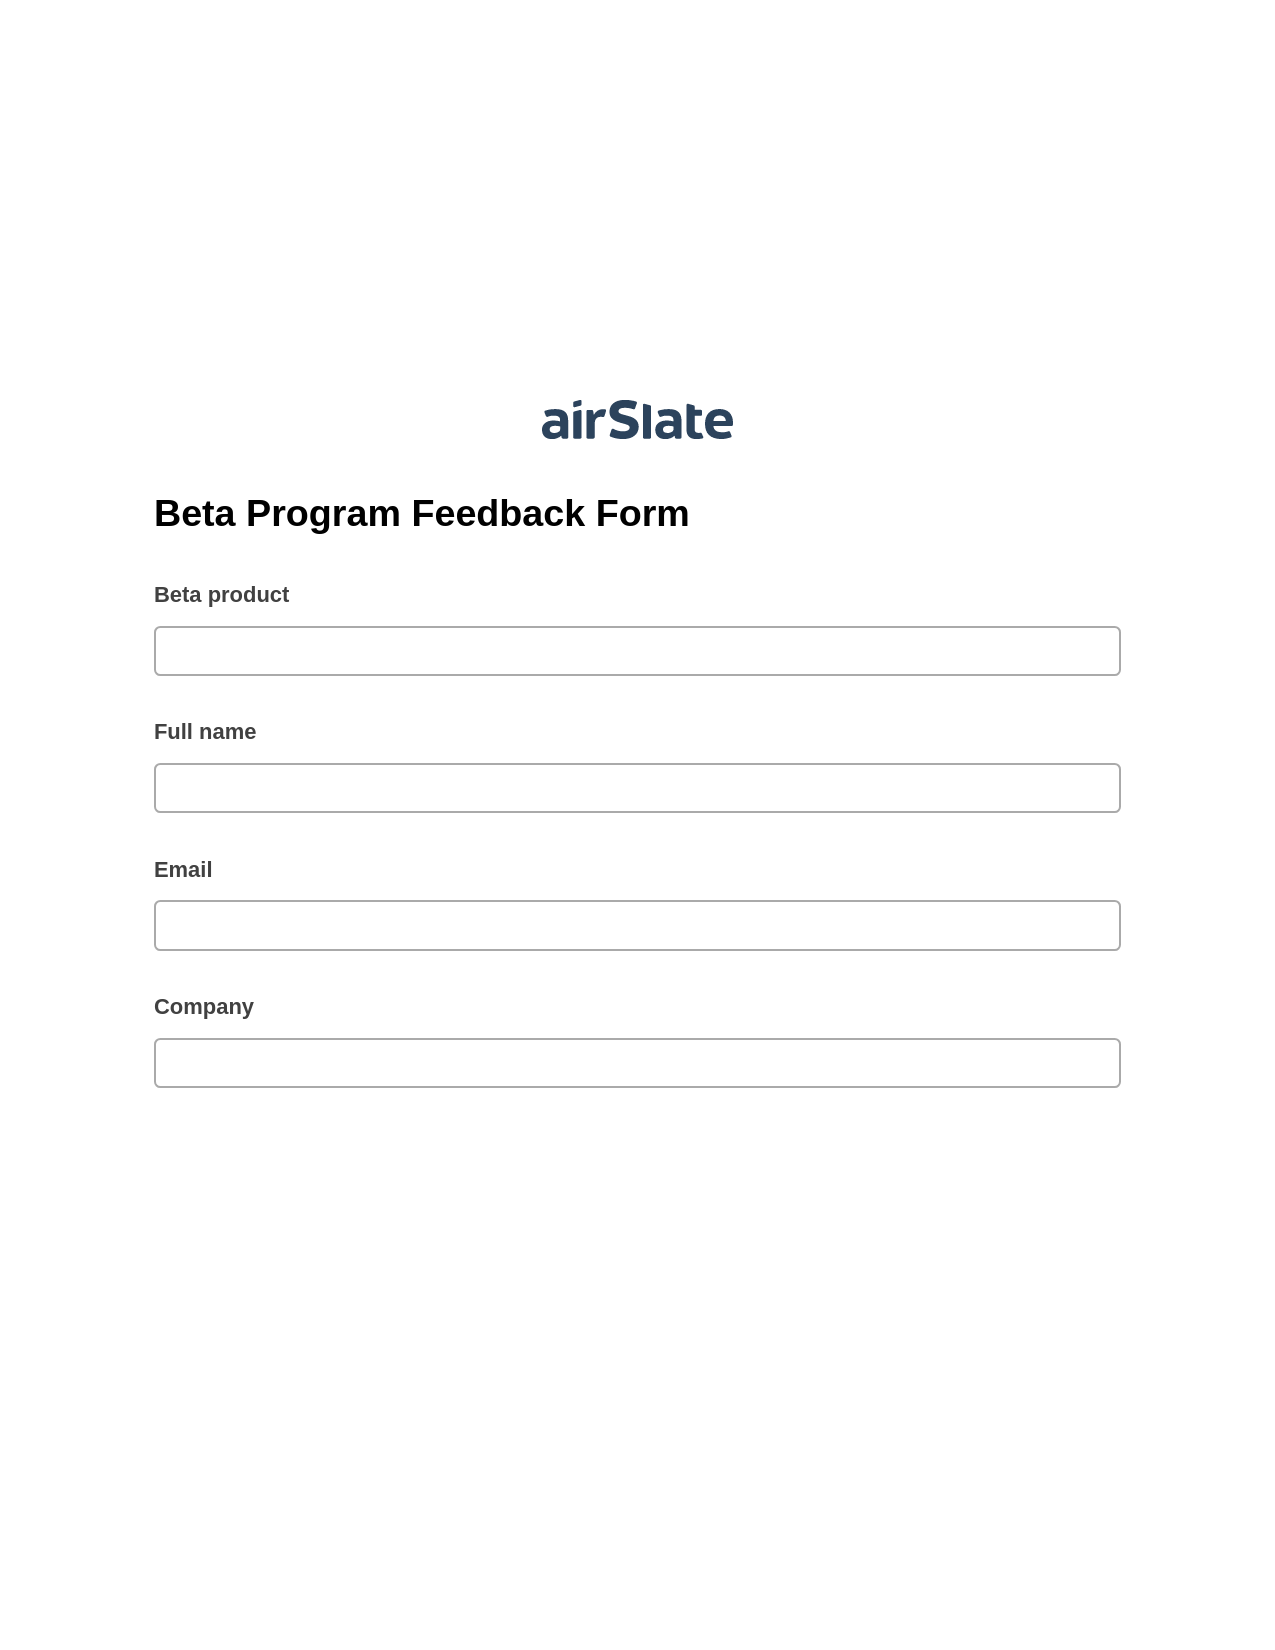 Beta Program Feedback Form Pre-fill Slate from MS Dynamics 365 Records Bot, Webhook Bot, Google Drive Bot